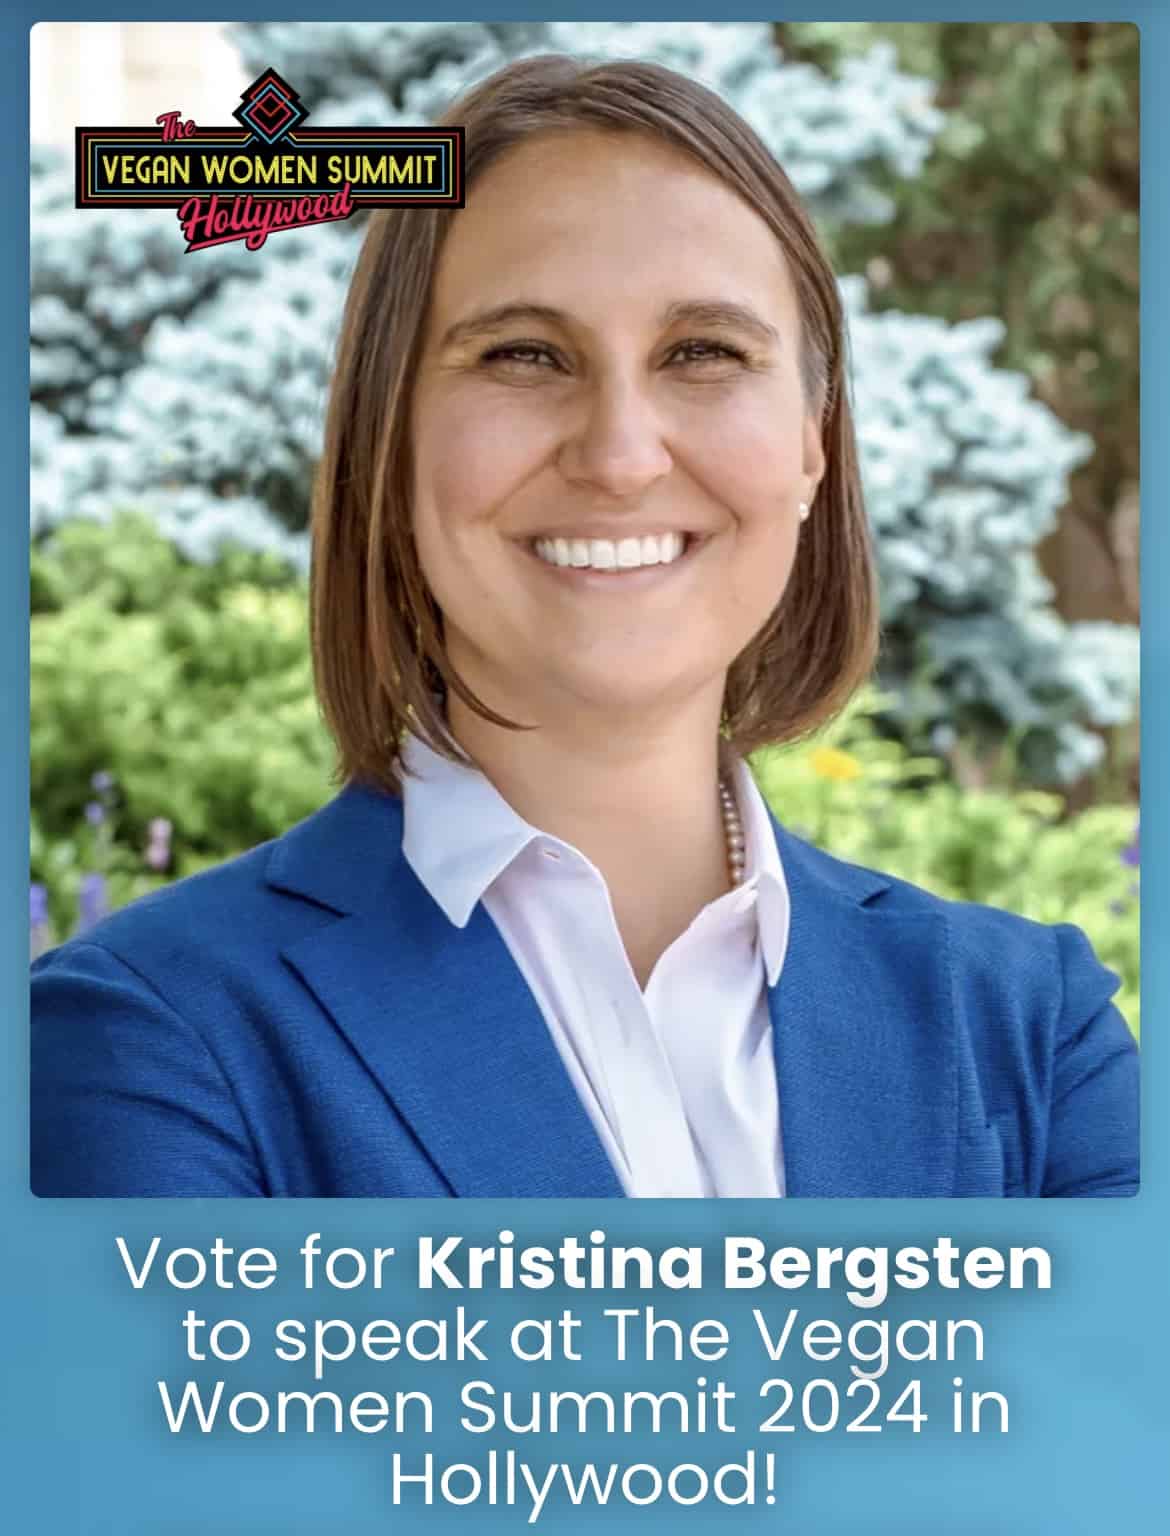 VOTE for Kristina to Speak at the Vegan Women Summit 2024!